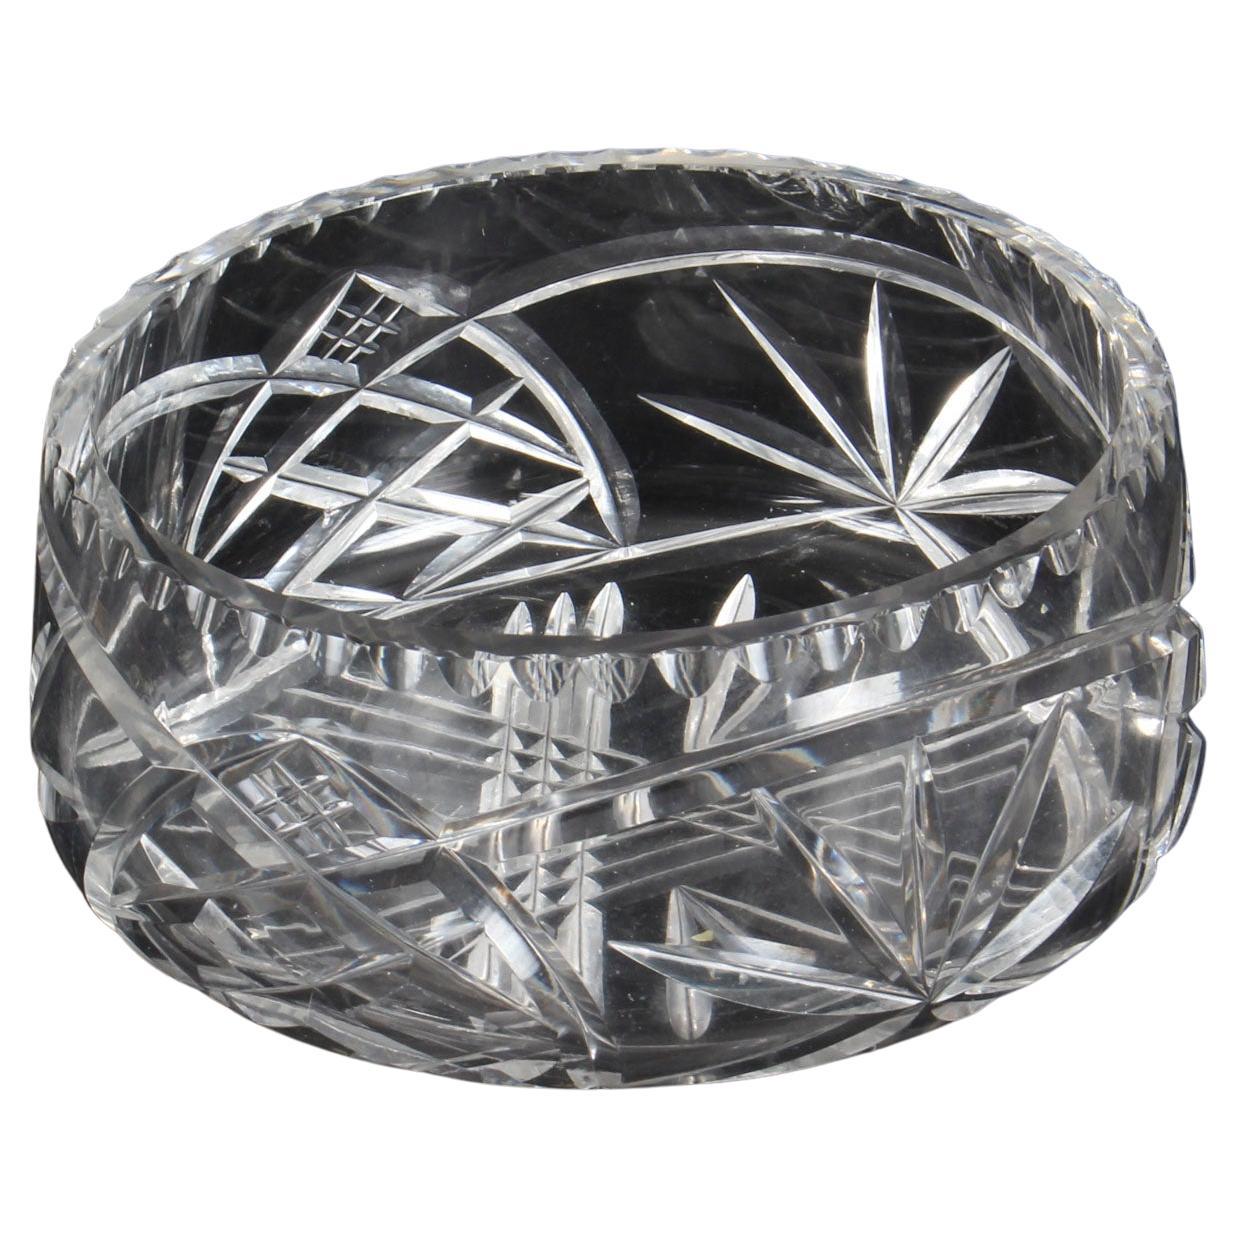 Vintage Cut Glass Crystal Bowl 20th Century